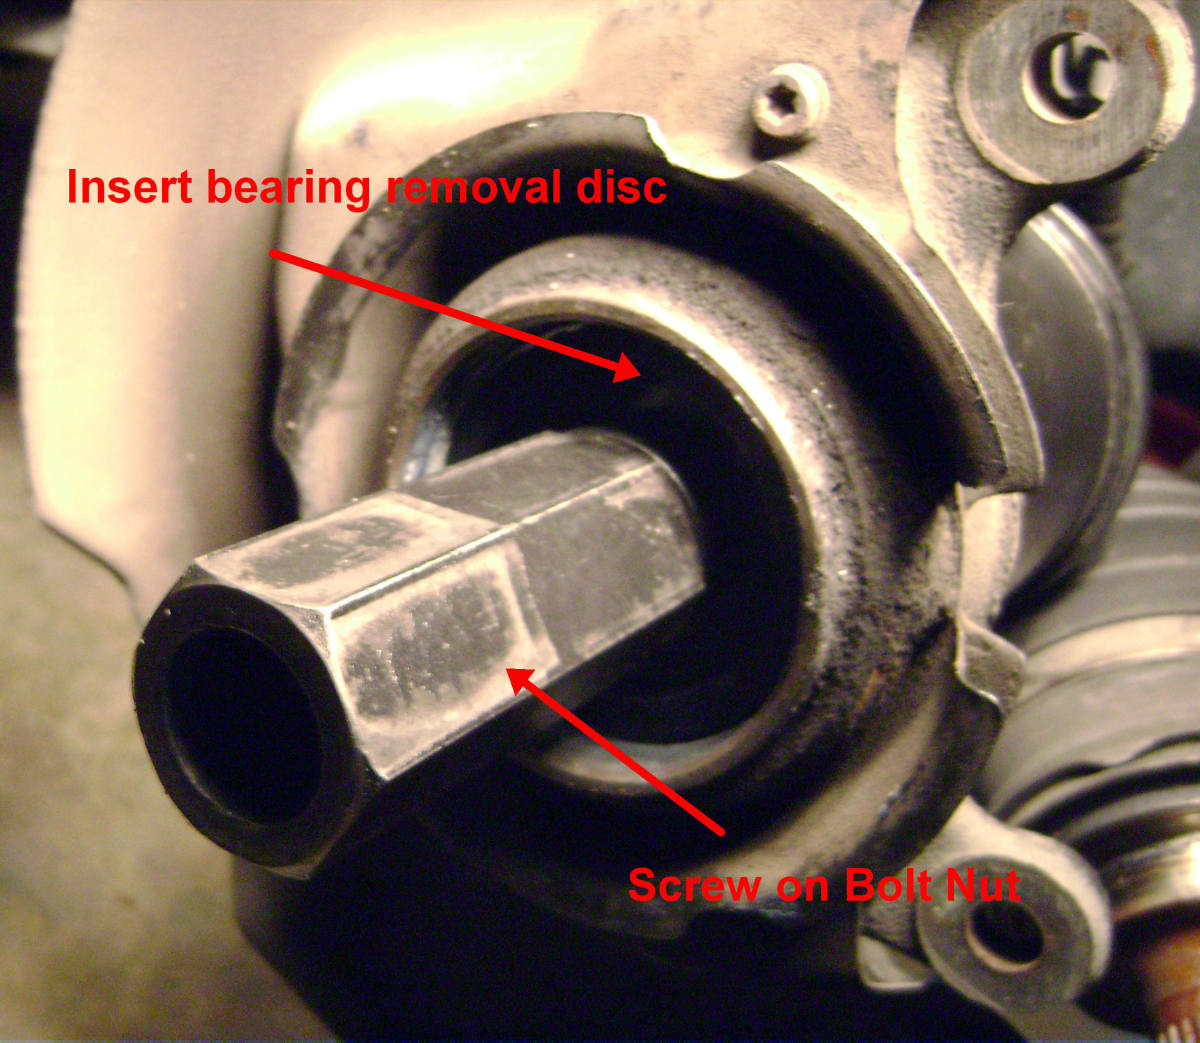 Q.  Insert bearing removal disc